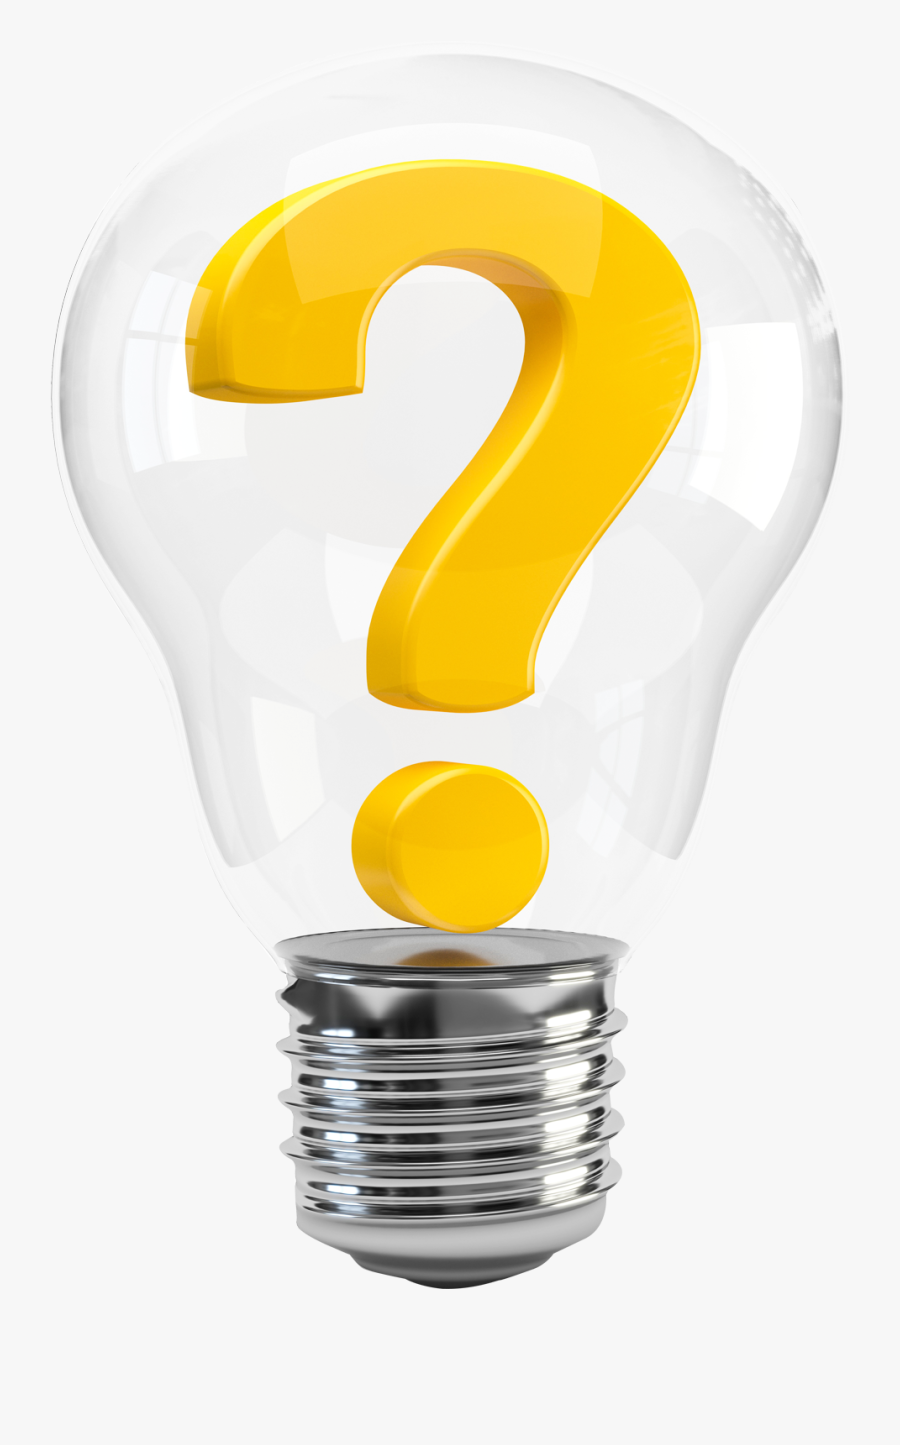 Lightbulb Clipart Question Mark - Light Bulb With Question Mark, Transparent Clipart